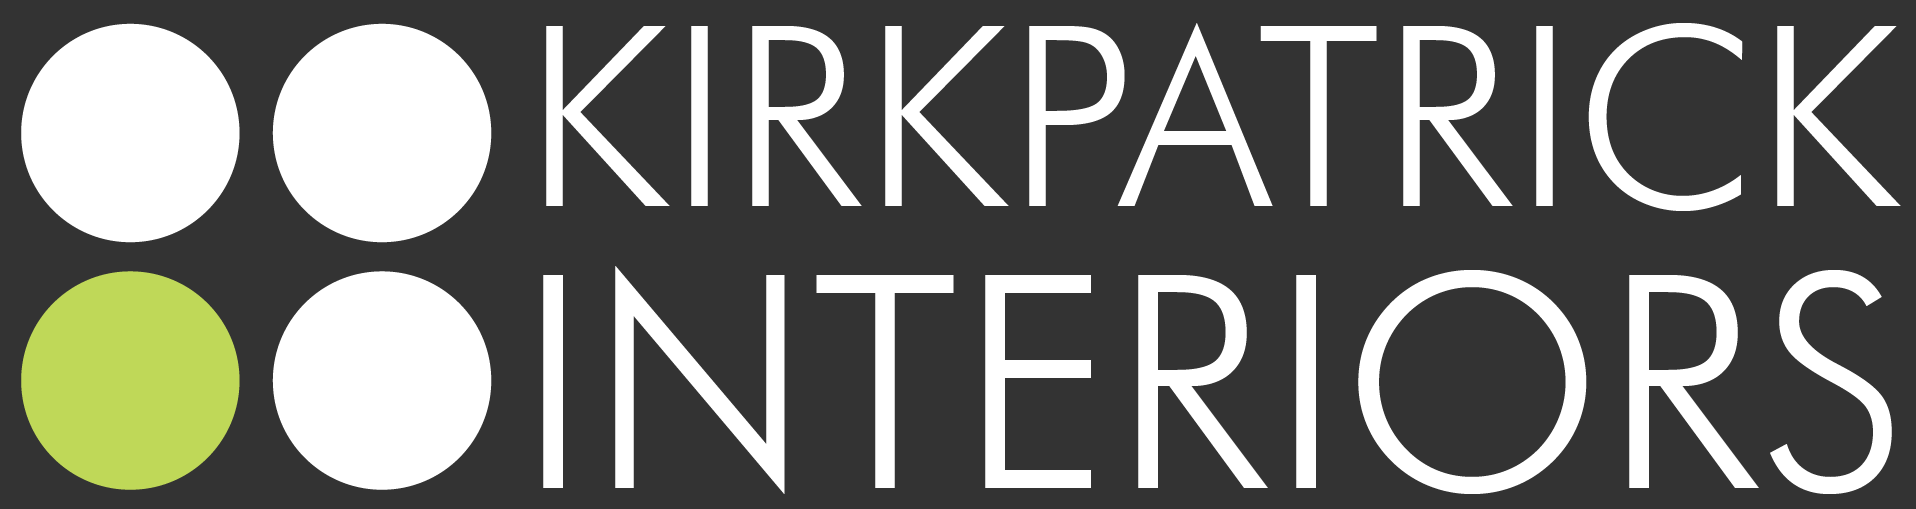 Kirkpatrick Interiors Logo